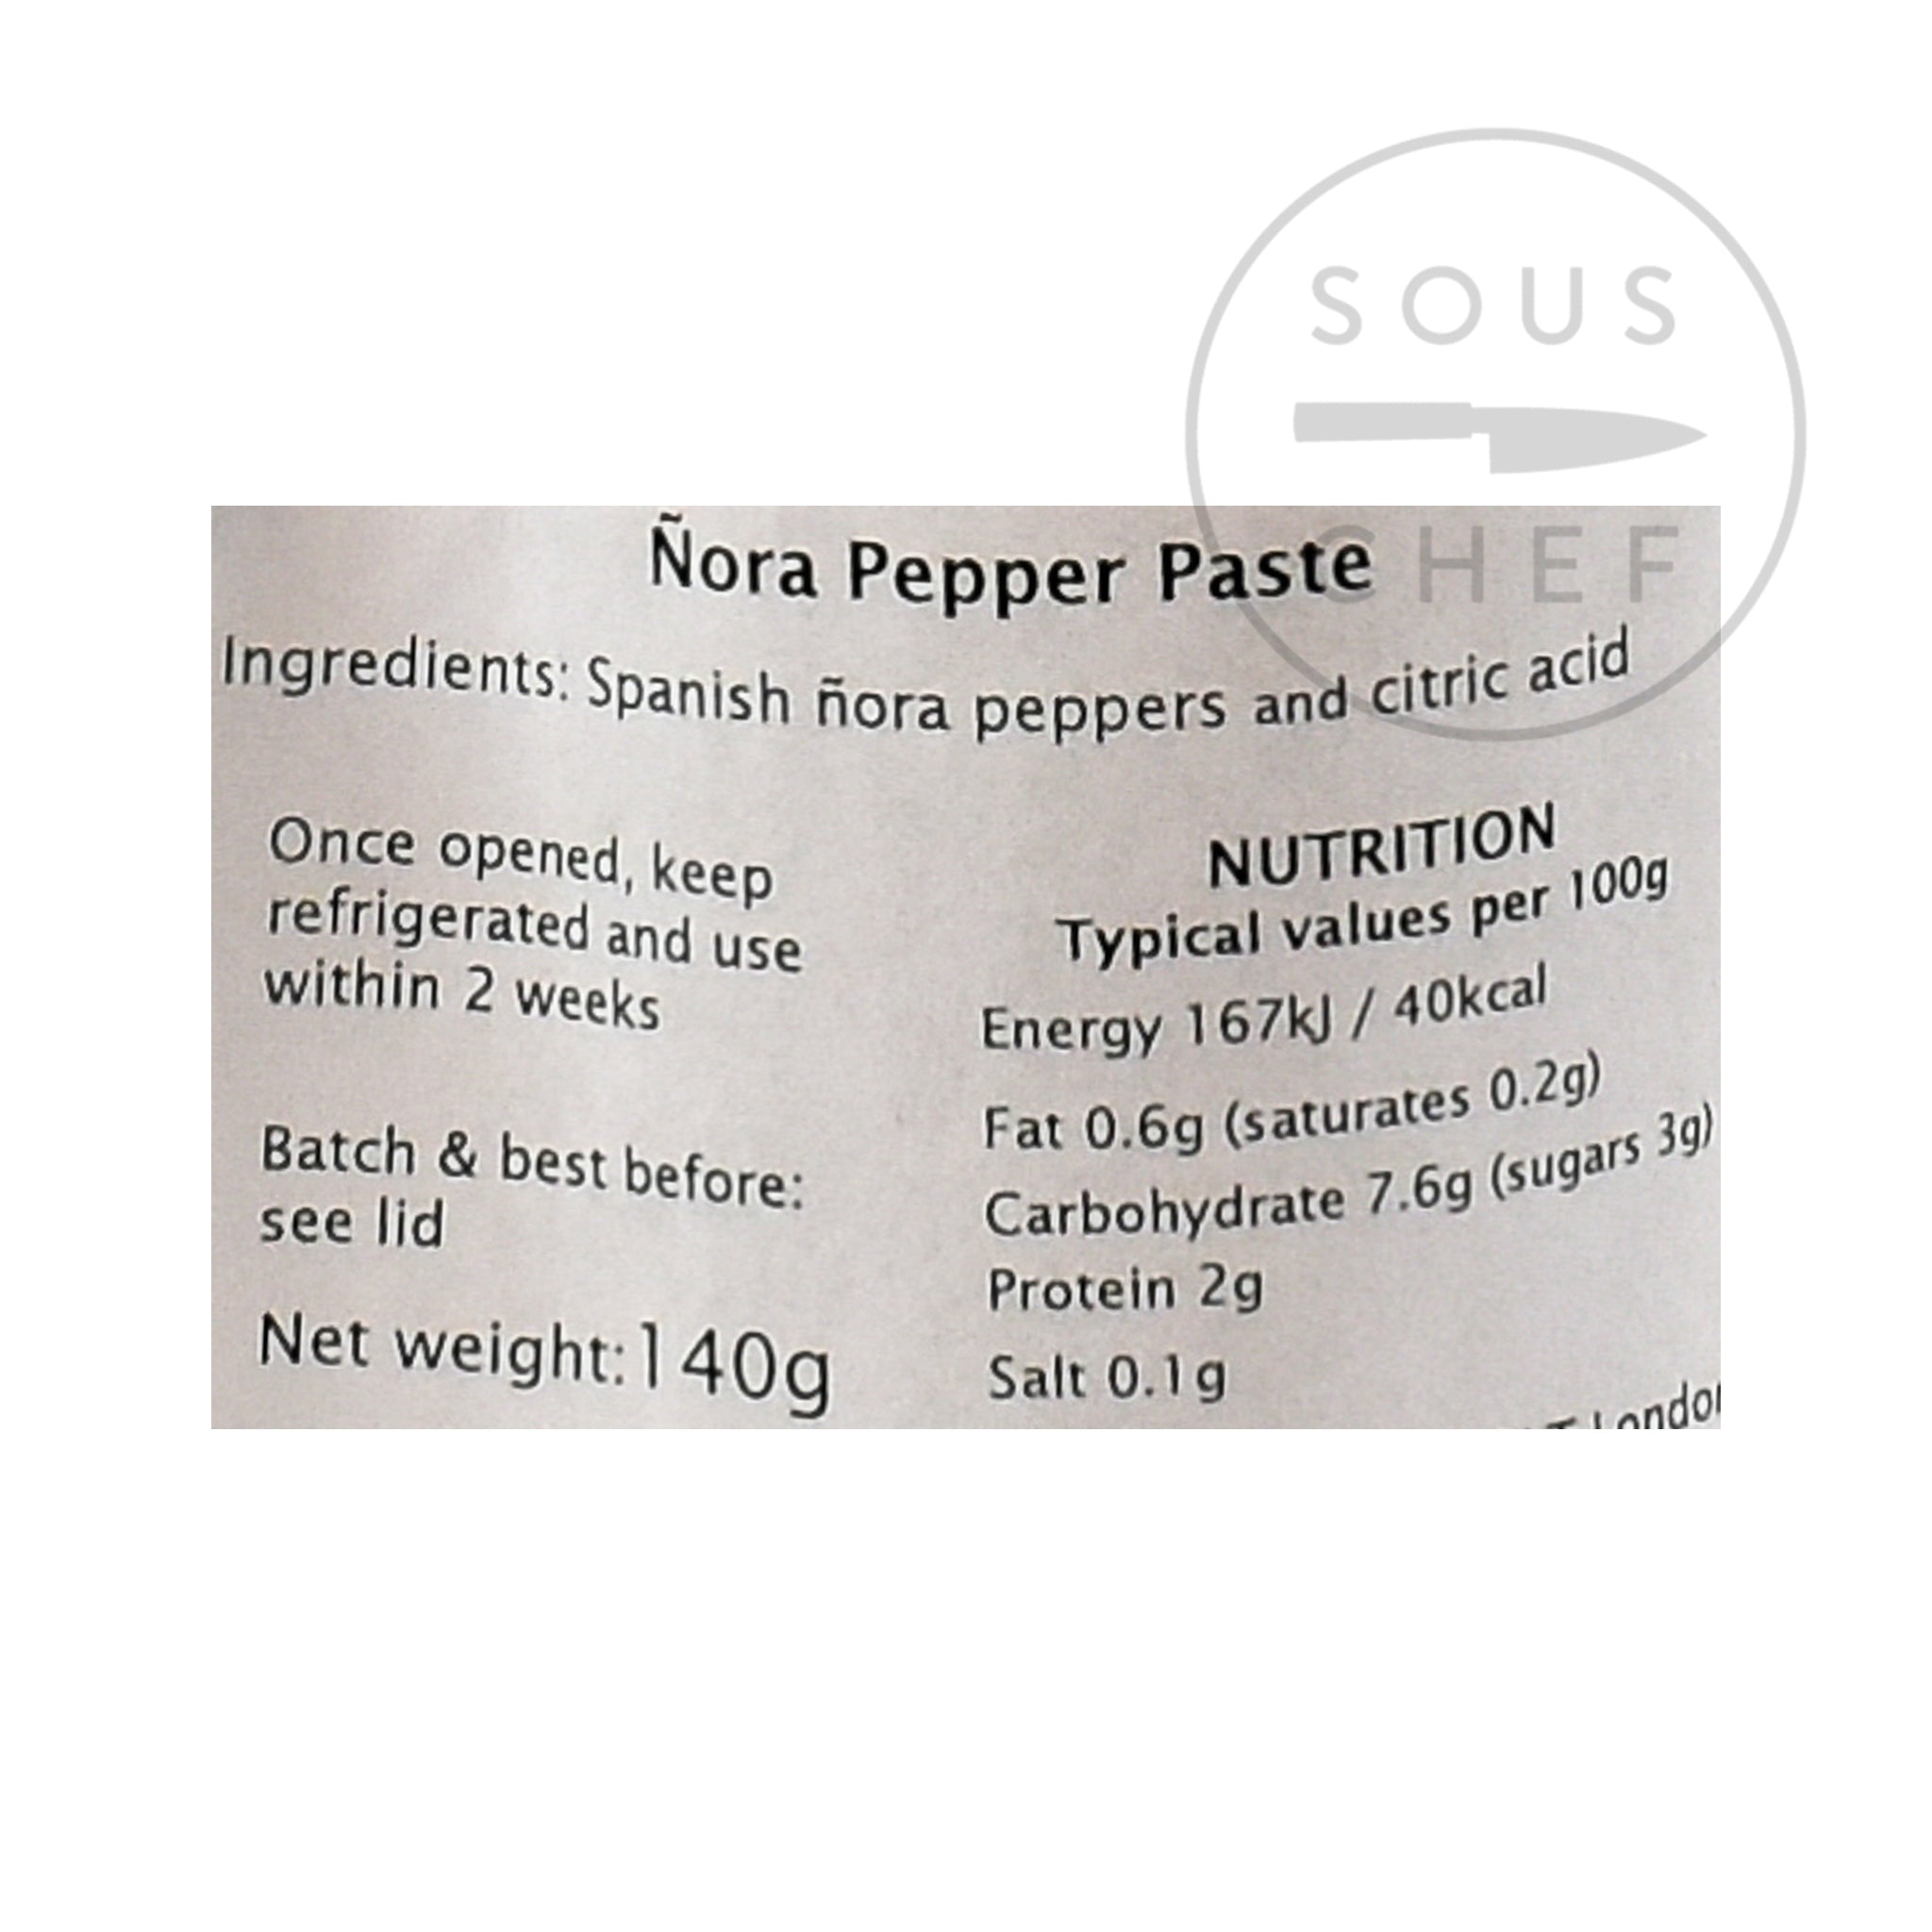 Nora Pepper Paste 140g nutritional information ingredients